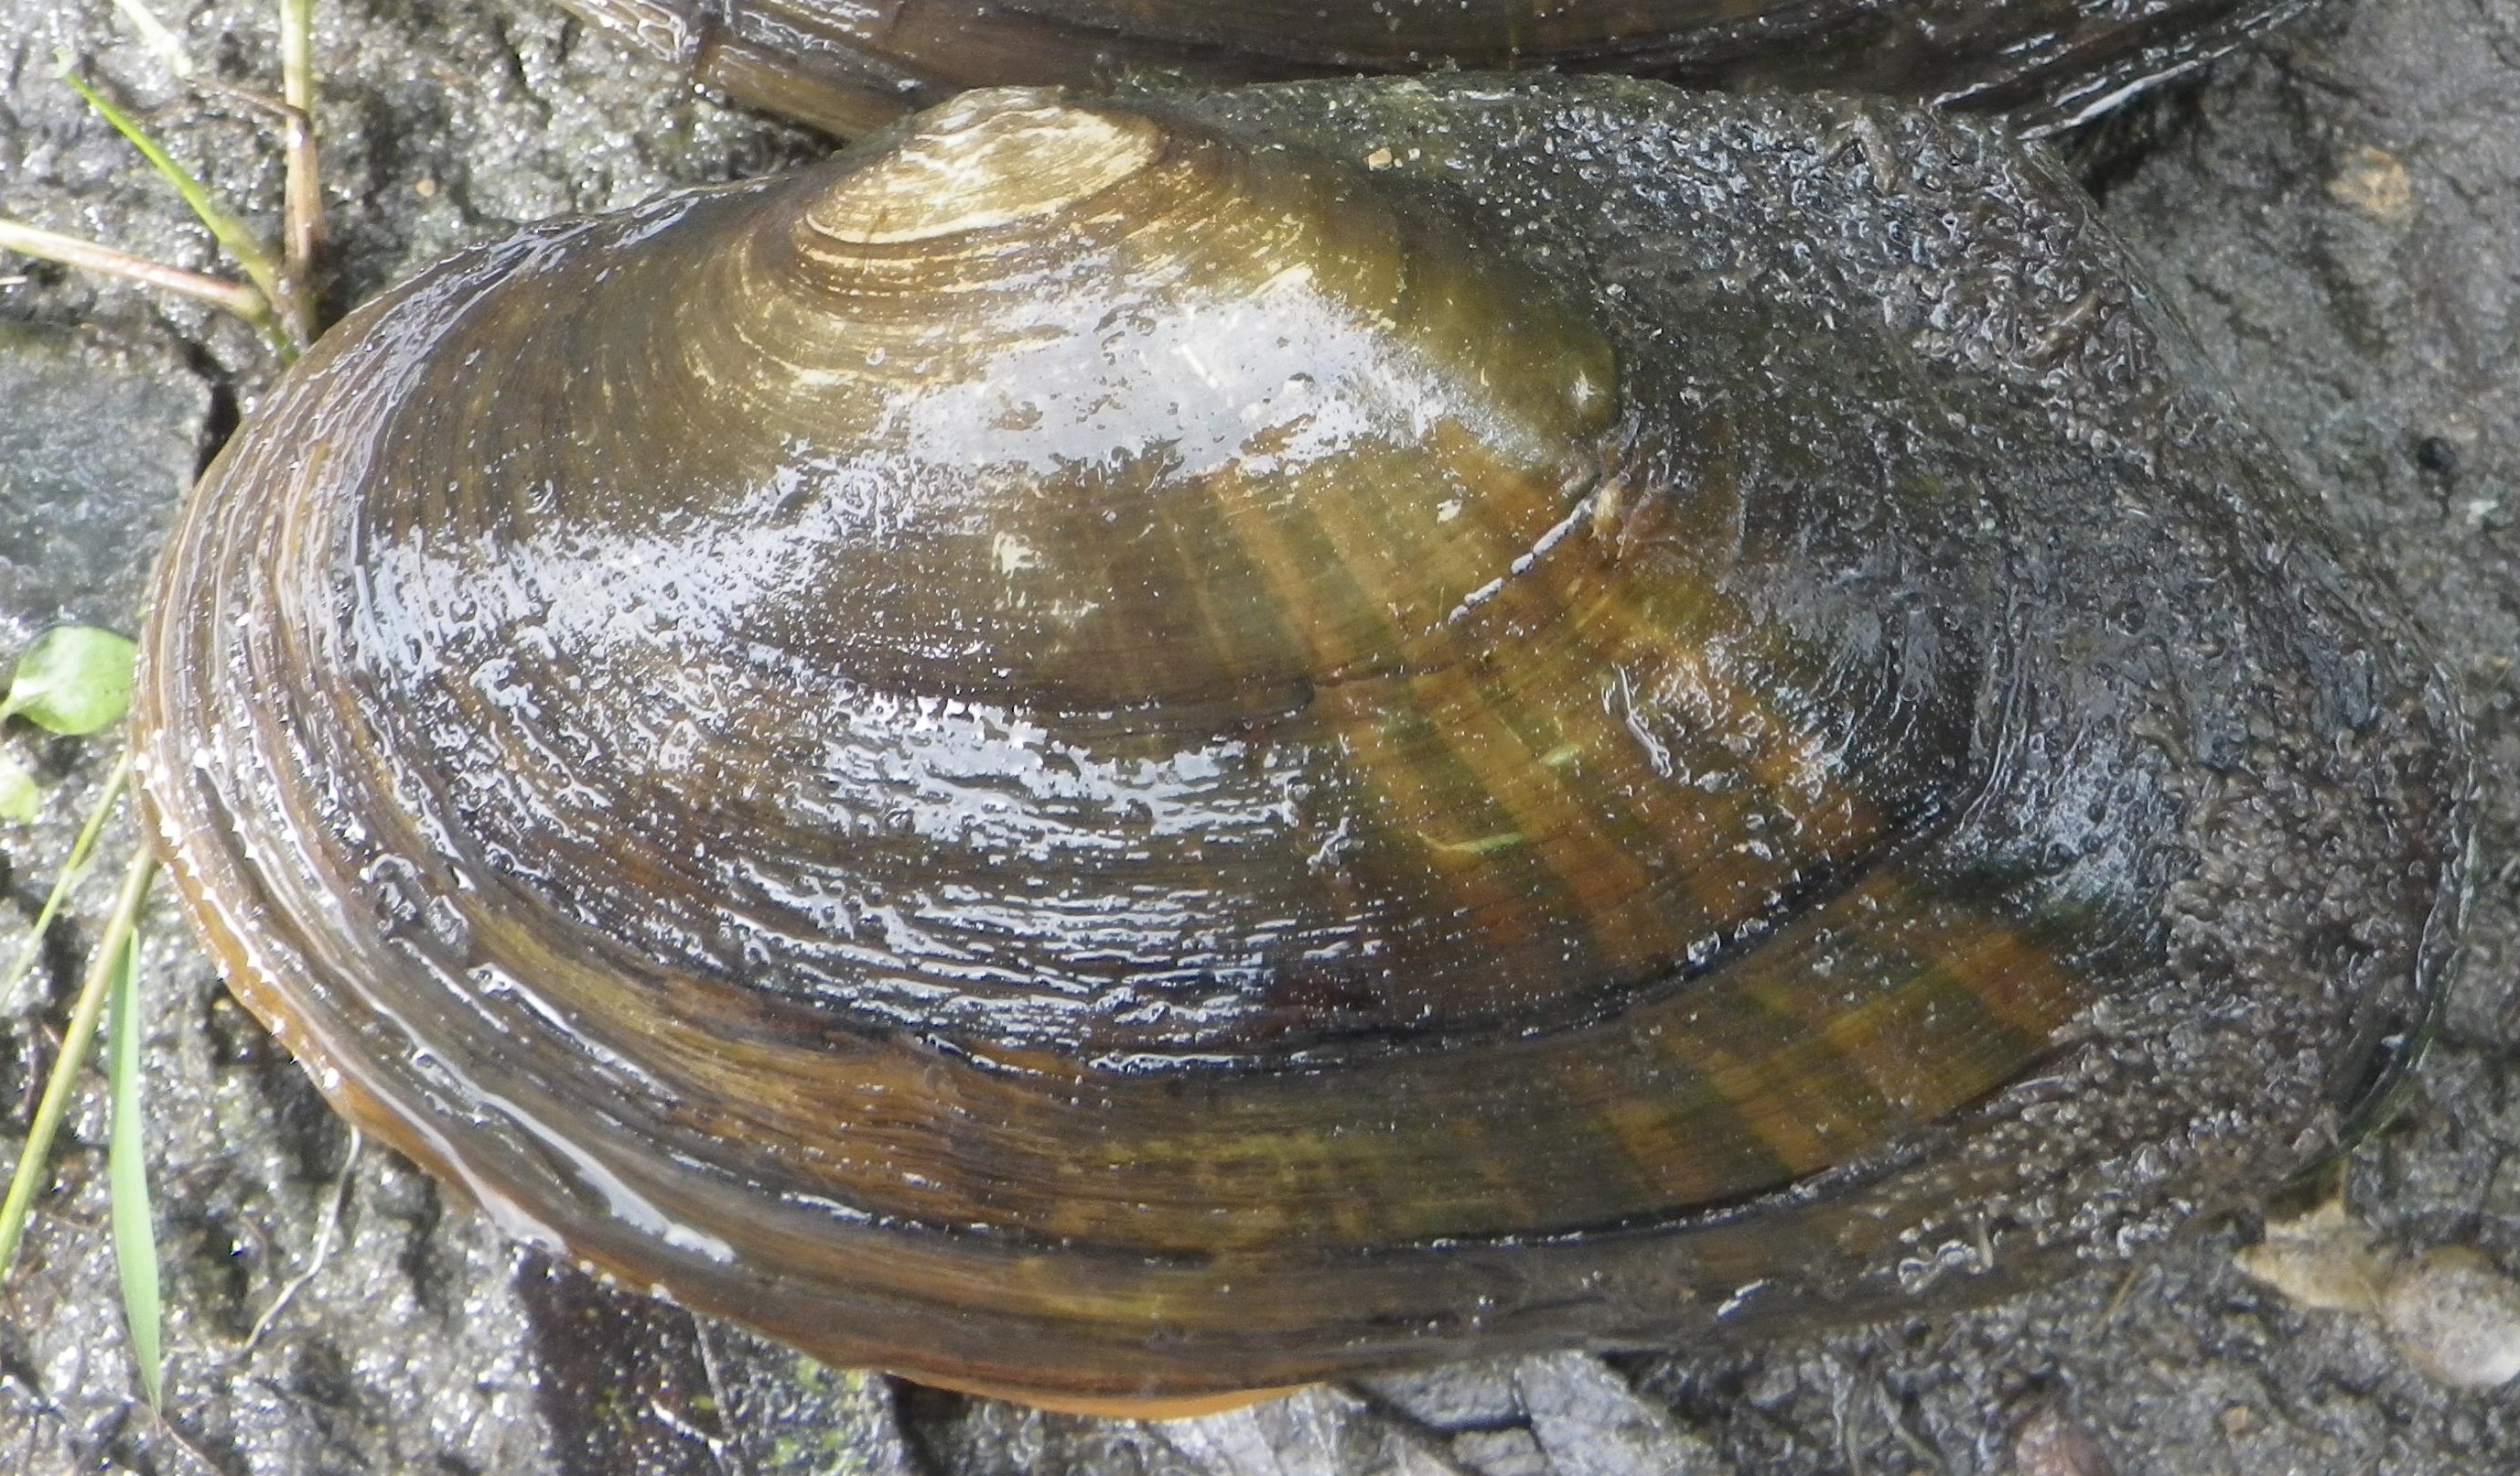 Creek heelsplitter freshwater mussel (Lasmigona compressa), a threatened species in Iowa.